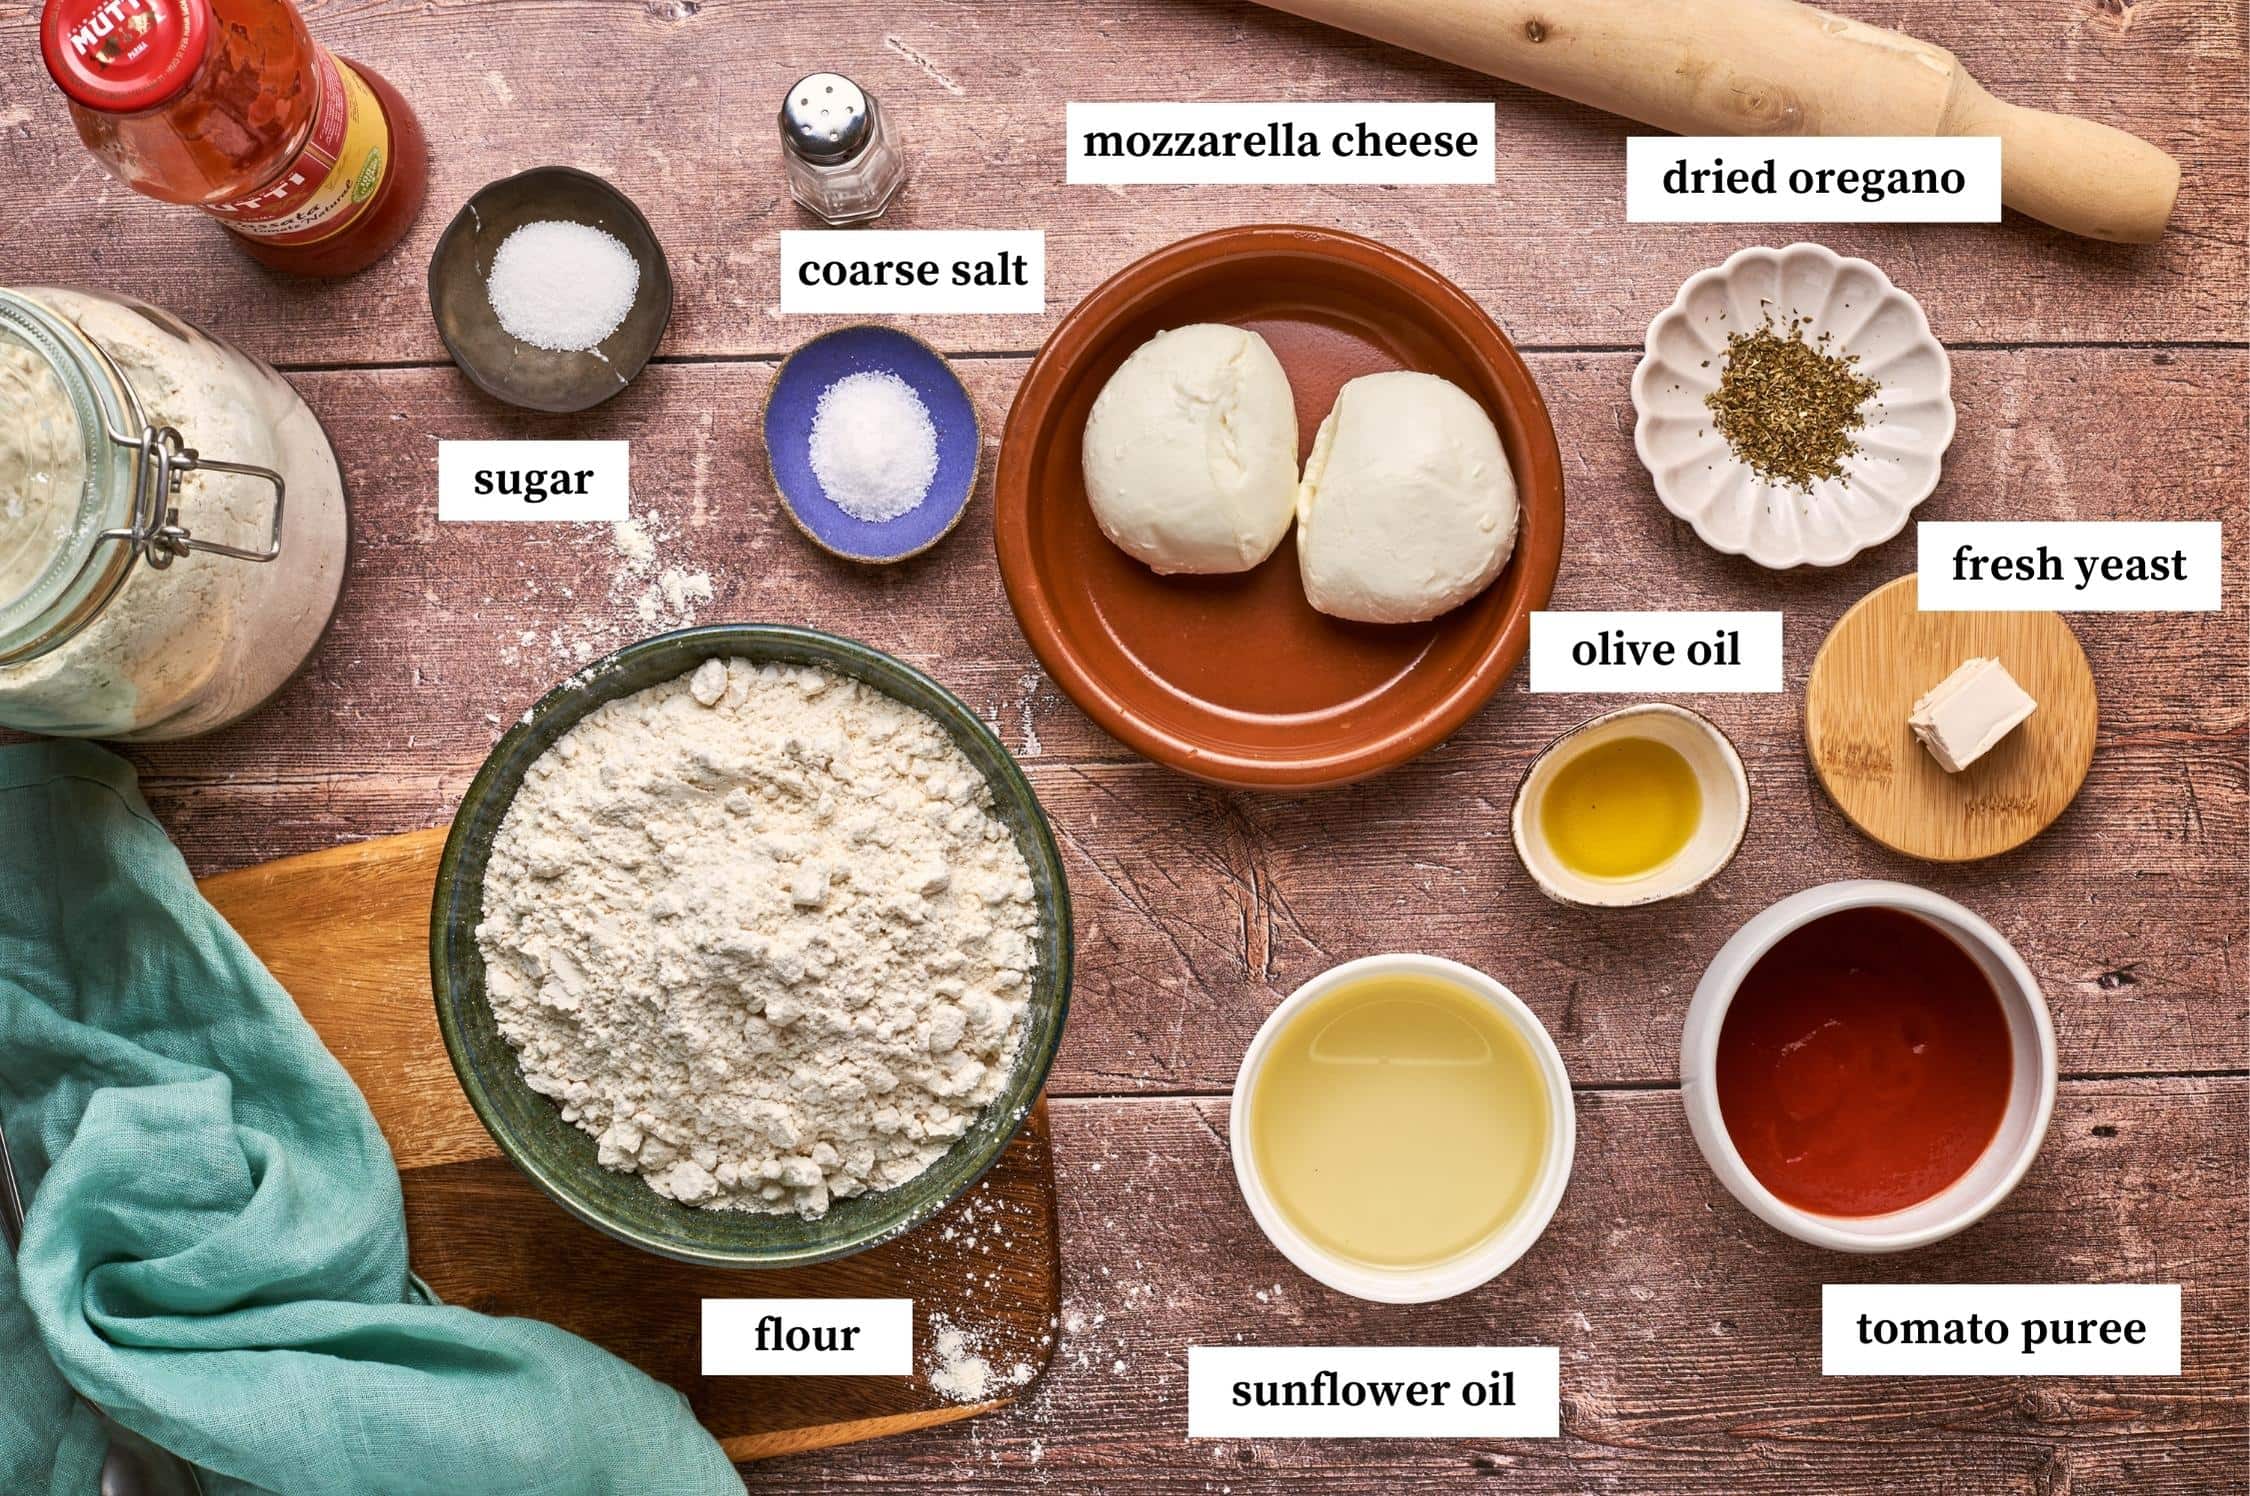 ingredients for panzerotti recipe on a table: flour, sunflower oil, tomato puree, fresh yeast, dried oregano, olive oil, mozzarella cheese, coarse salt, sugar.